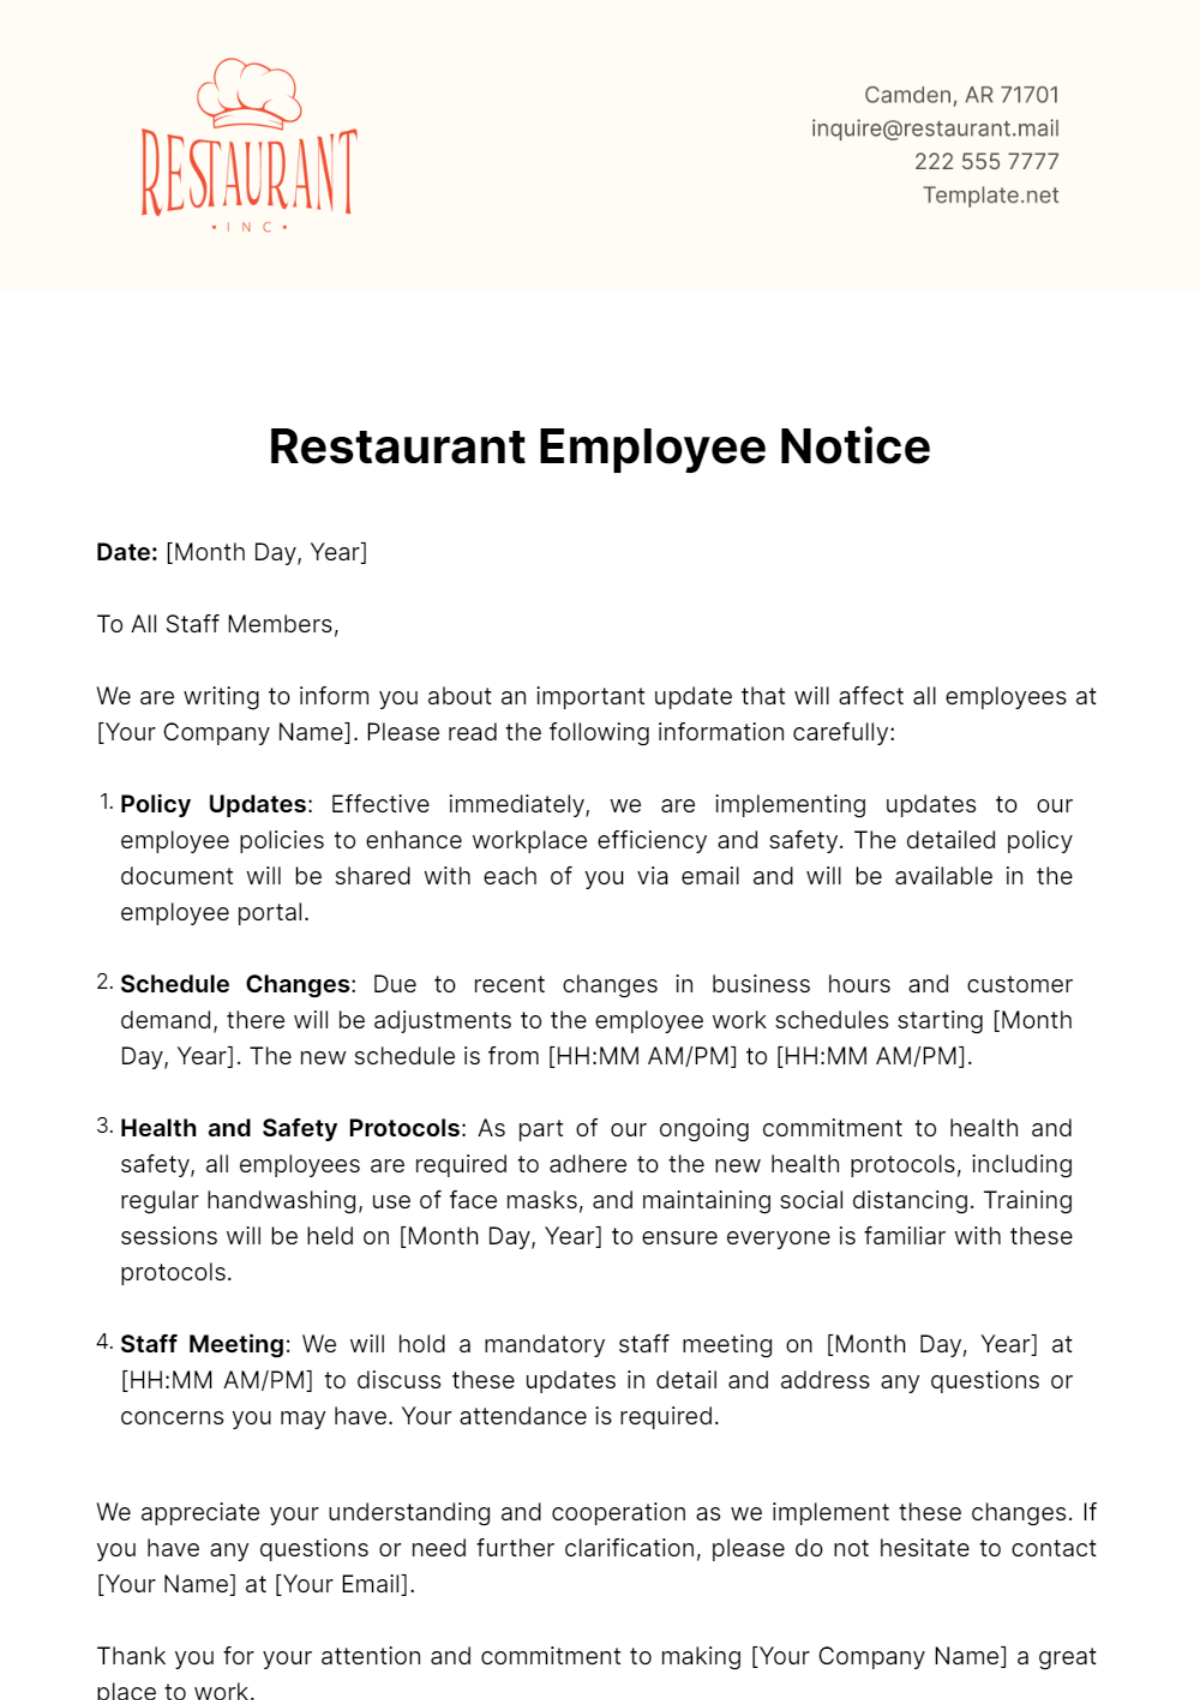 Free Restaurant Employee Notice Template